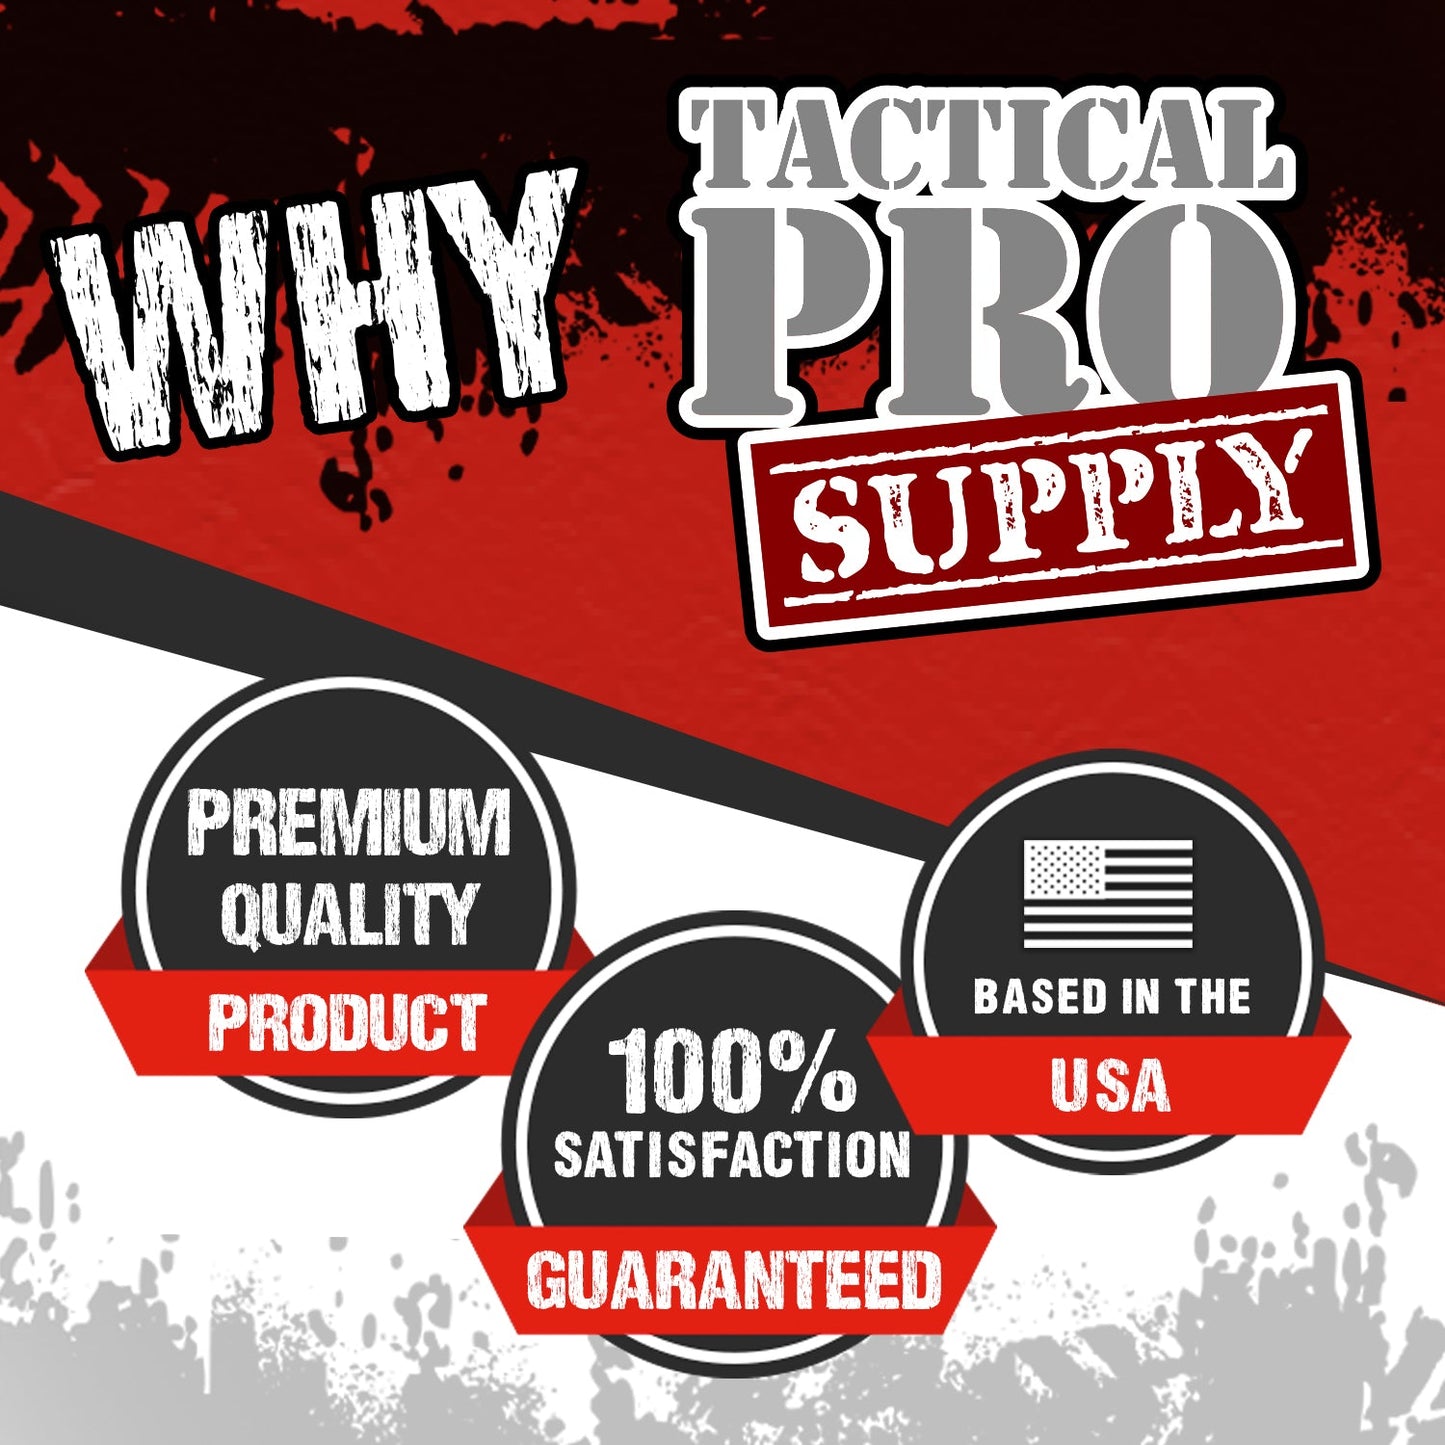 Don't Tread On Me V2 - Tactical Pro Supply, LLC